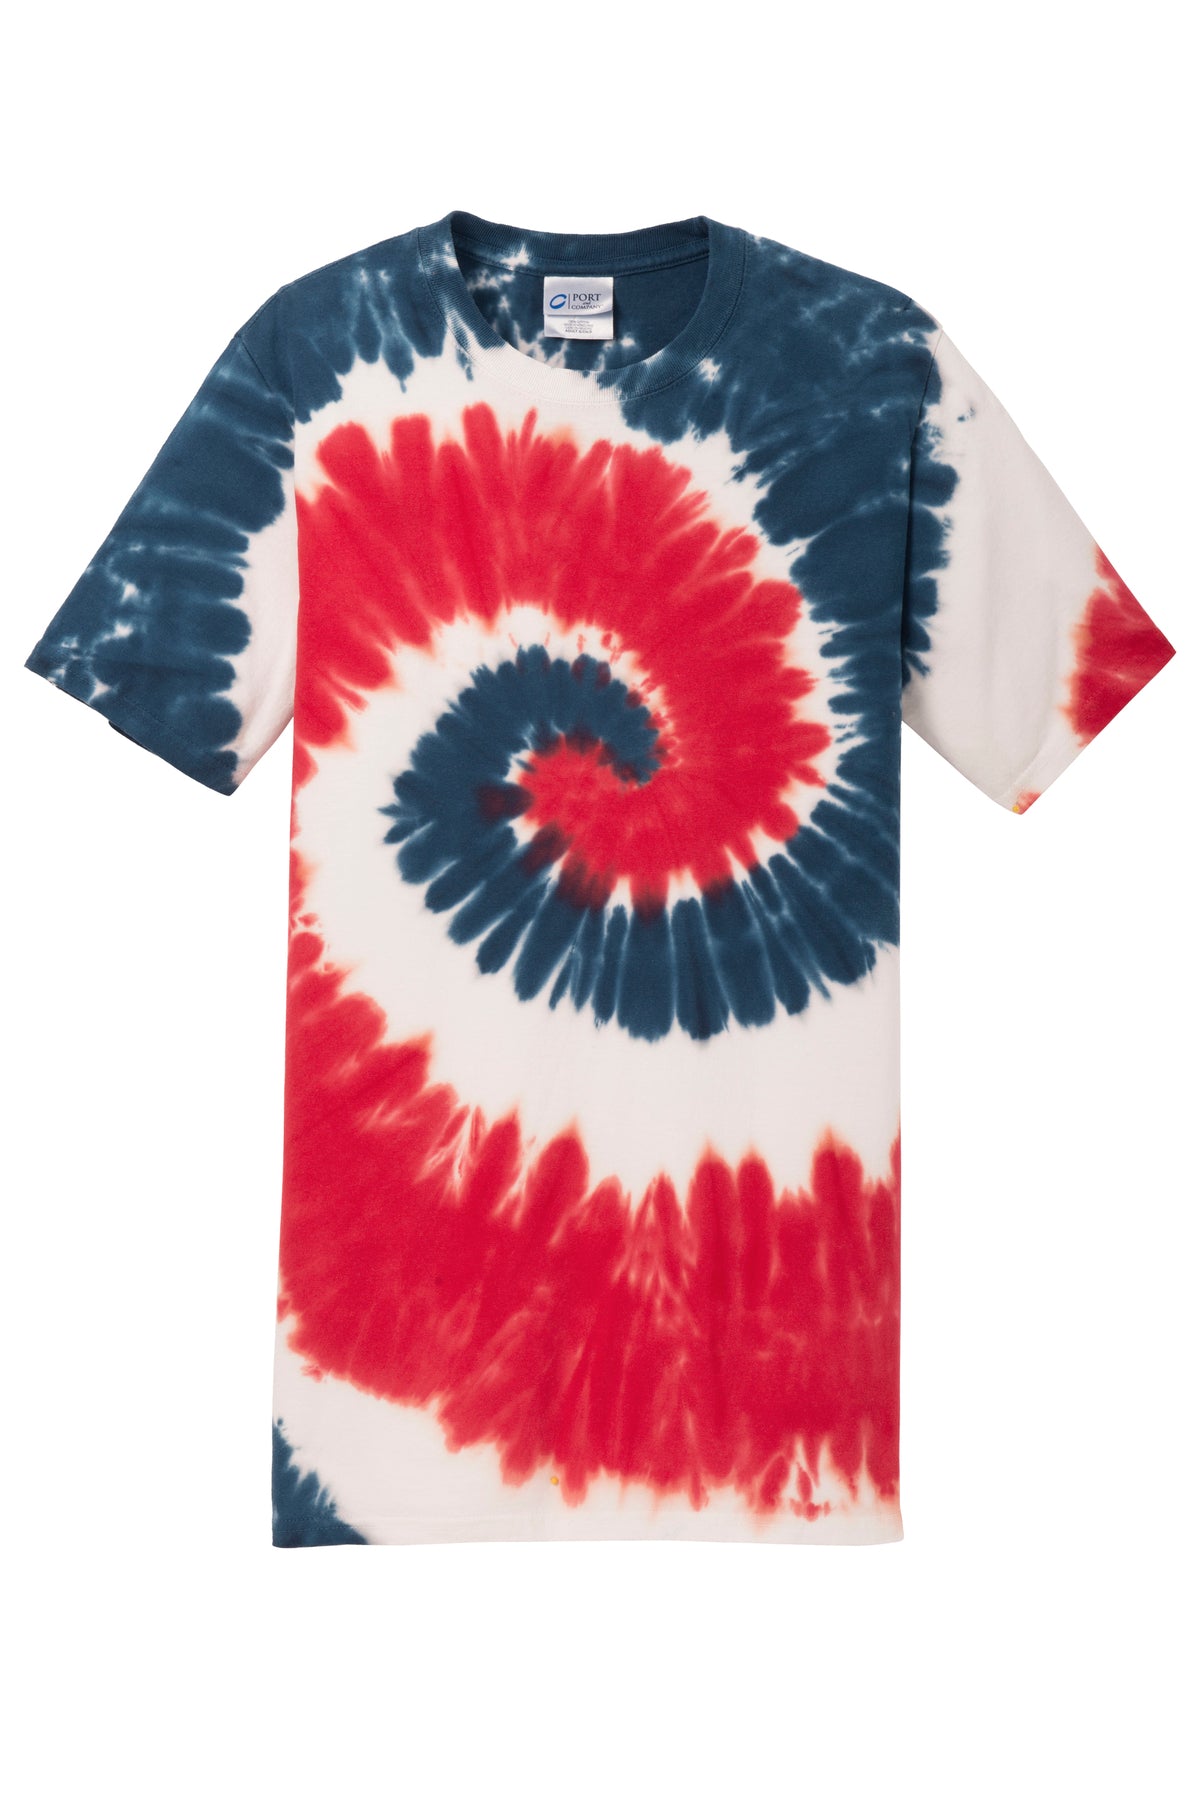 Port & Company Tie-Dye Mens/Unisex Cotton Short Sleeve Shirts USA Rainbow